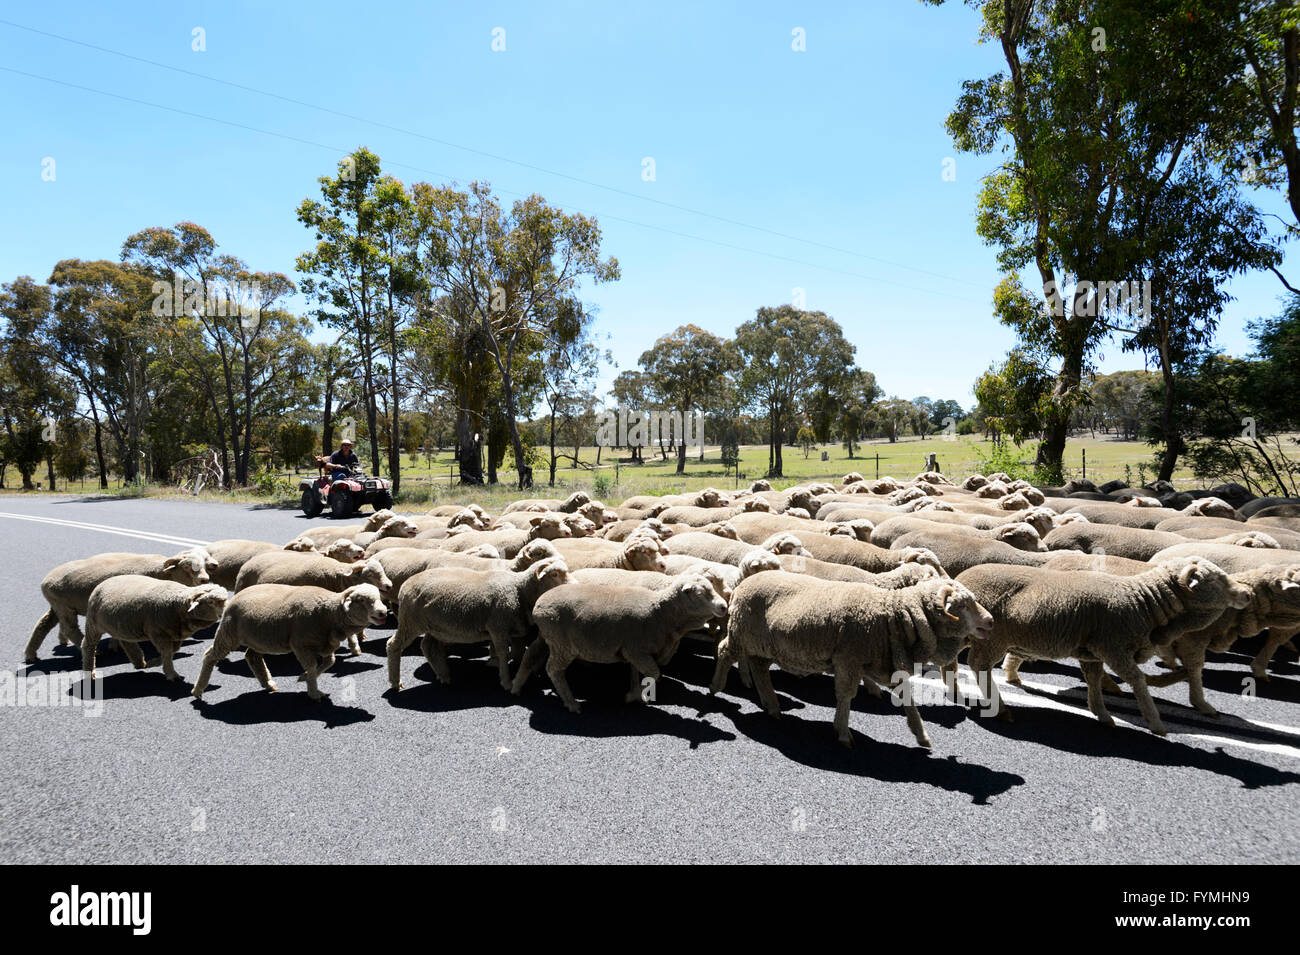 Farmer sheperding his sheep from a quadbike, near Hill End, New South Wales, NSW, Australia Stock Photo